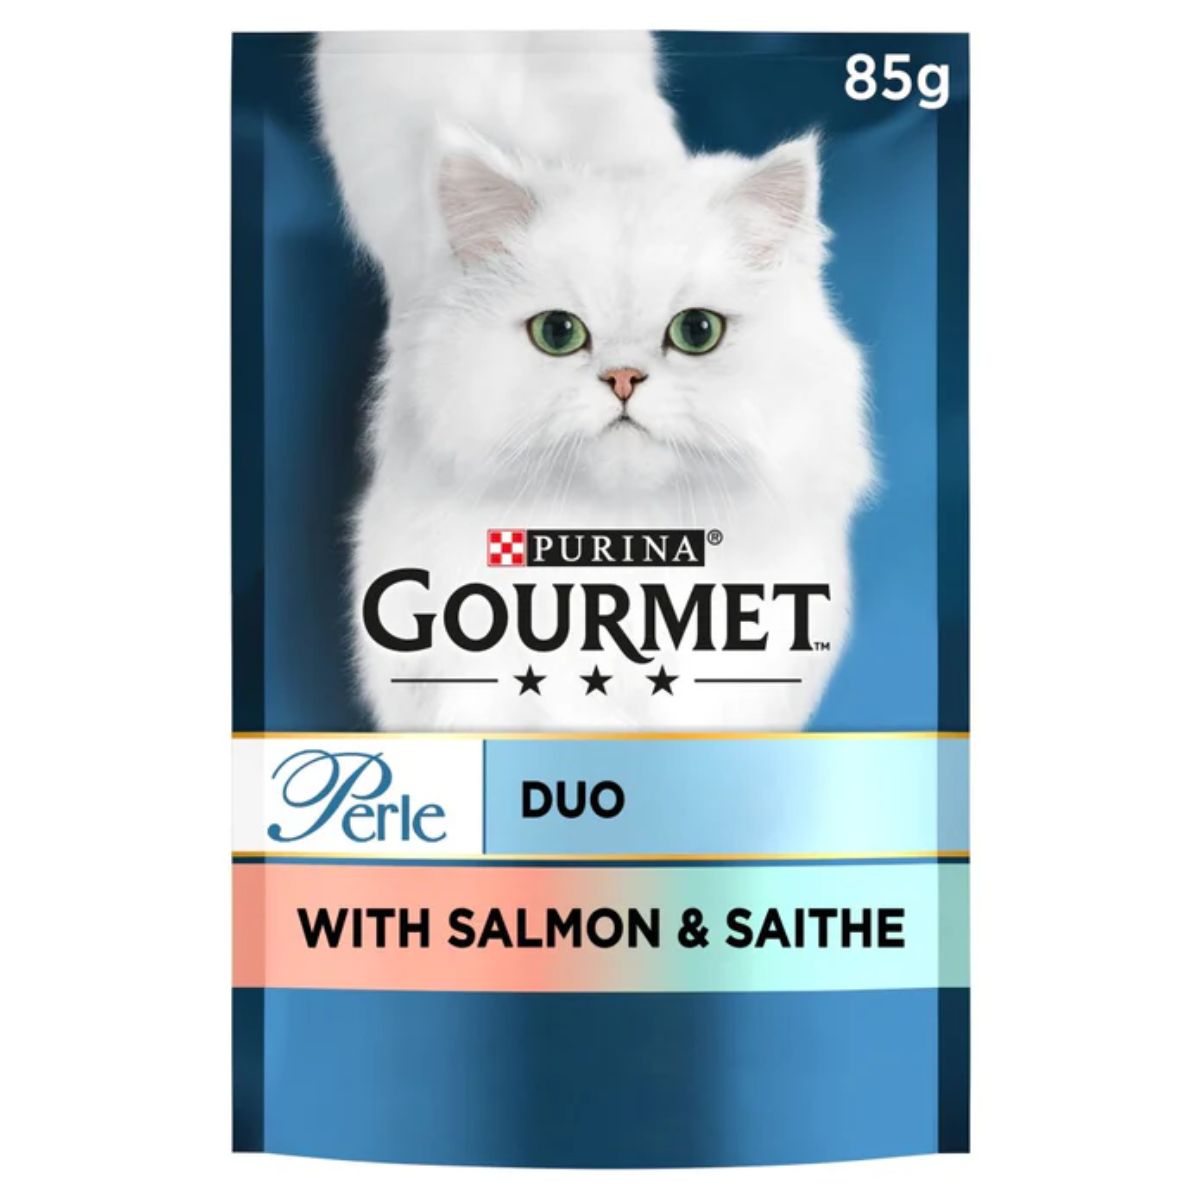 Purina Gourmet - Perle Cat Food Duo with Salmon & Saithe - 85g.